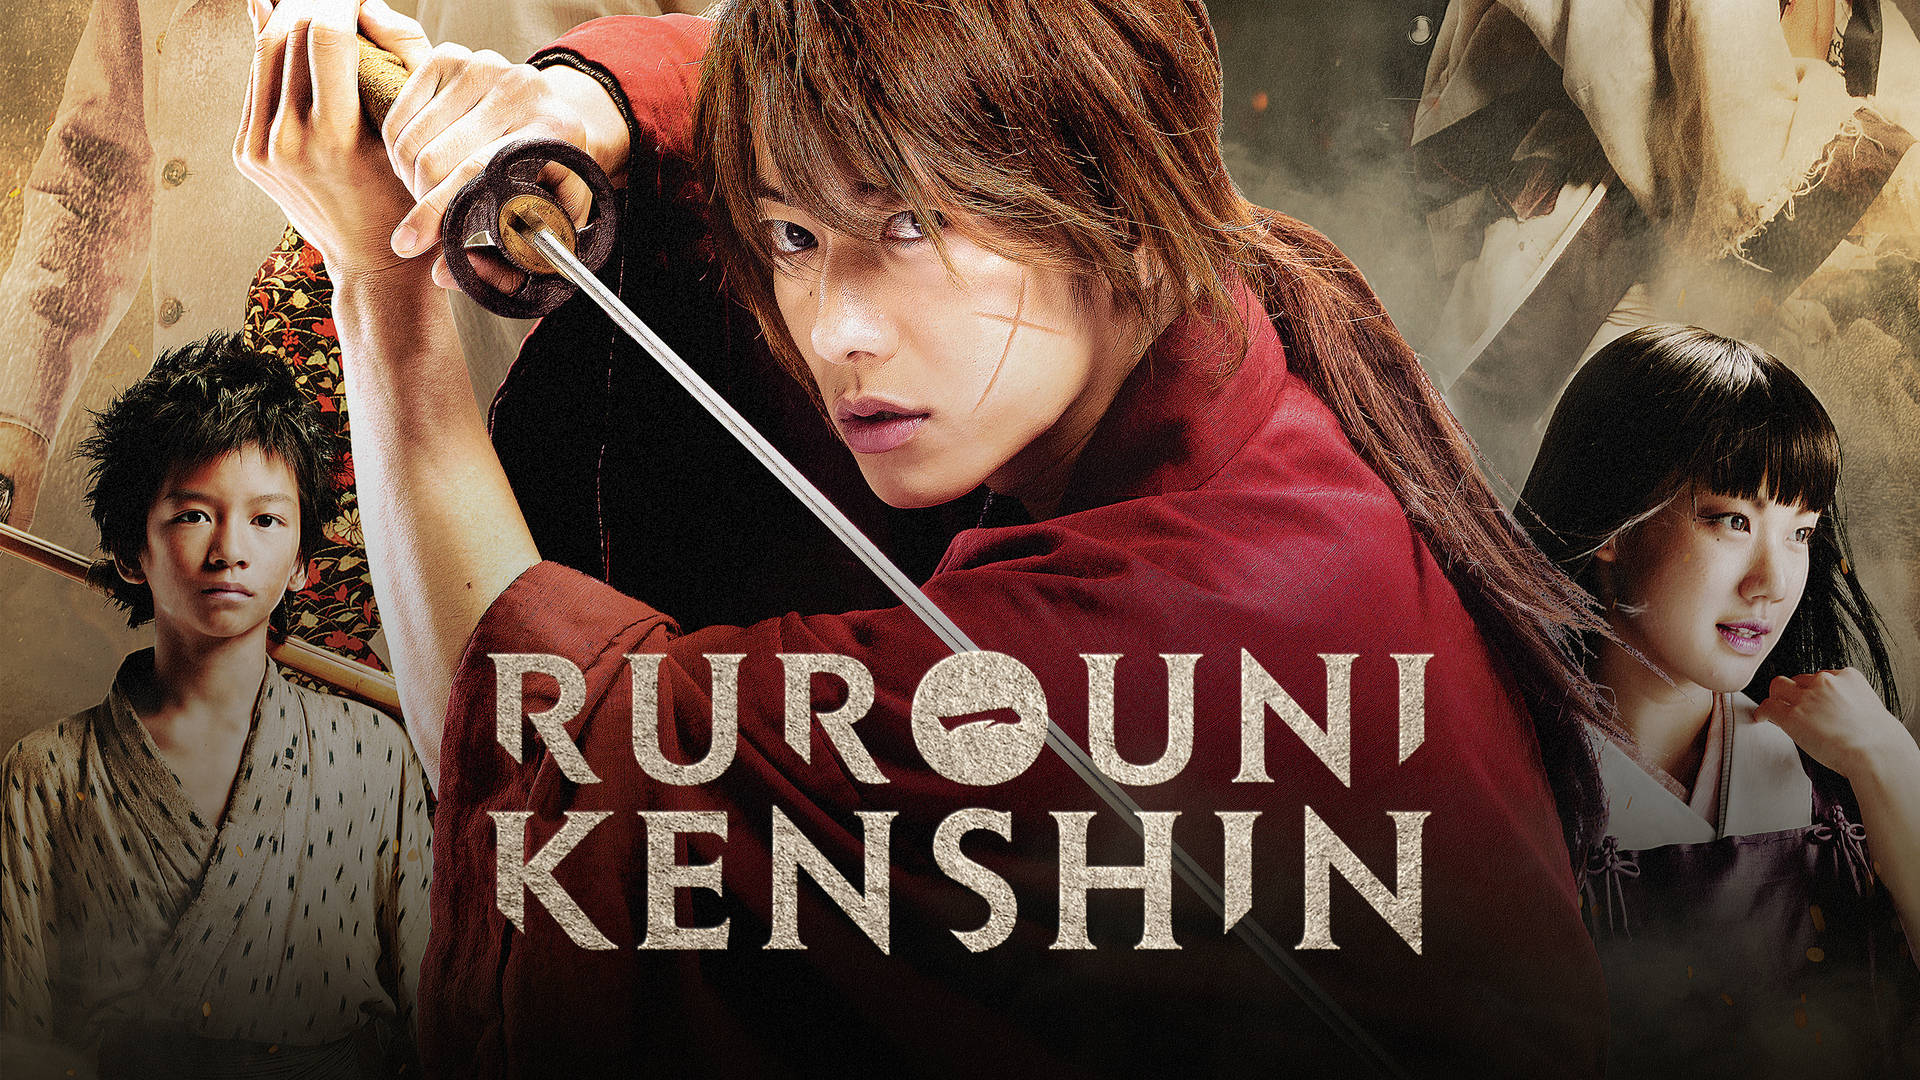 Iconic Scene From Rurouni Kenshin Anime Series